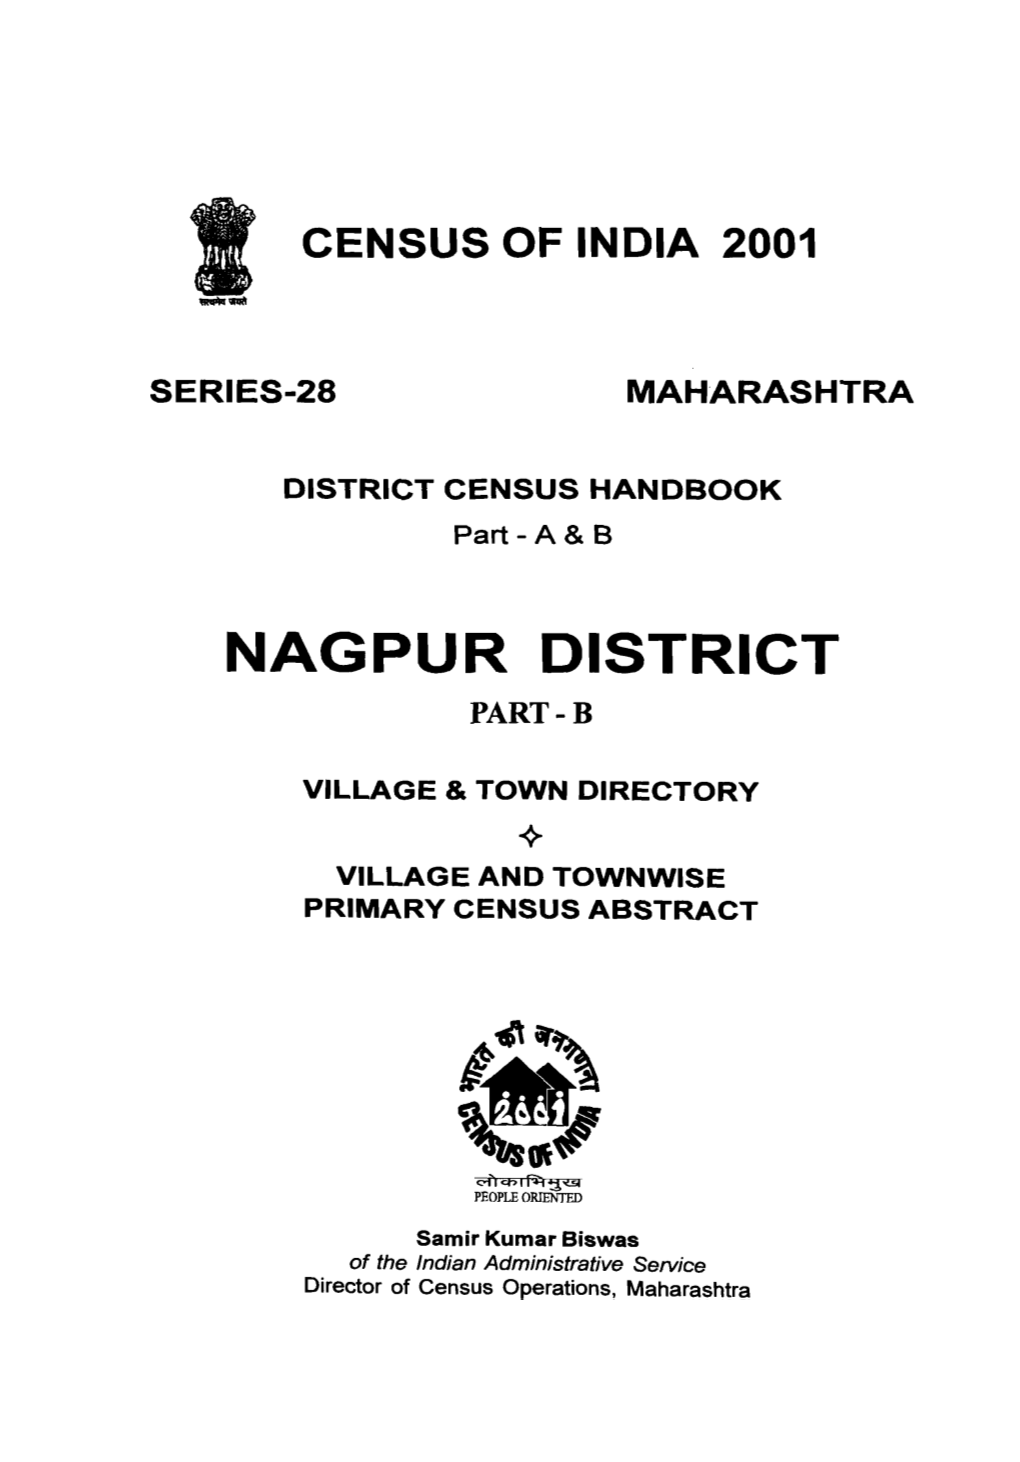 District Census Handbook, Nagpur, Part-B, Part a & B, Series-28